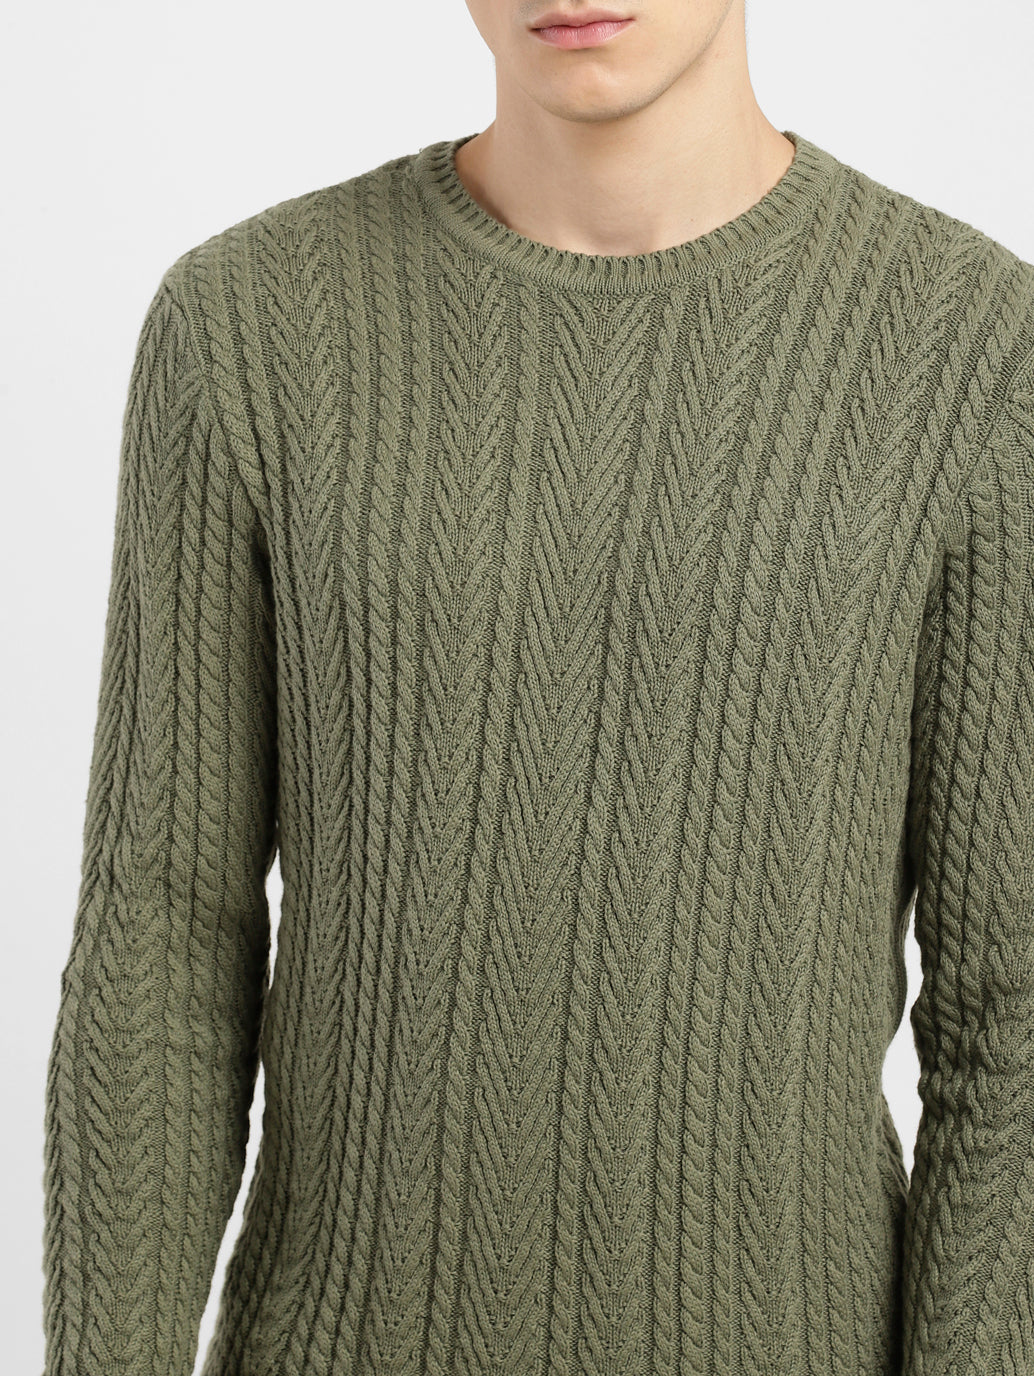 Men's Self Design Olive Crew Neck Sweater